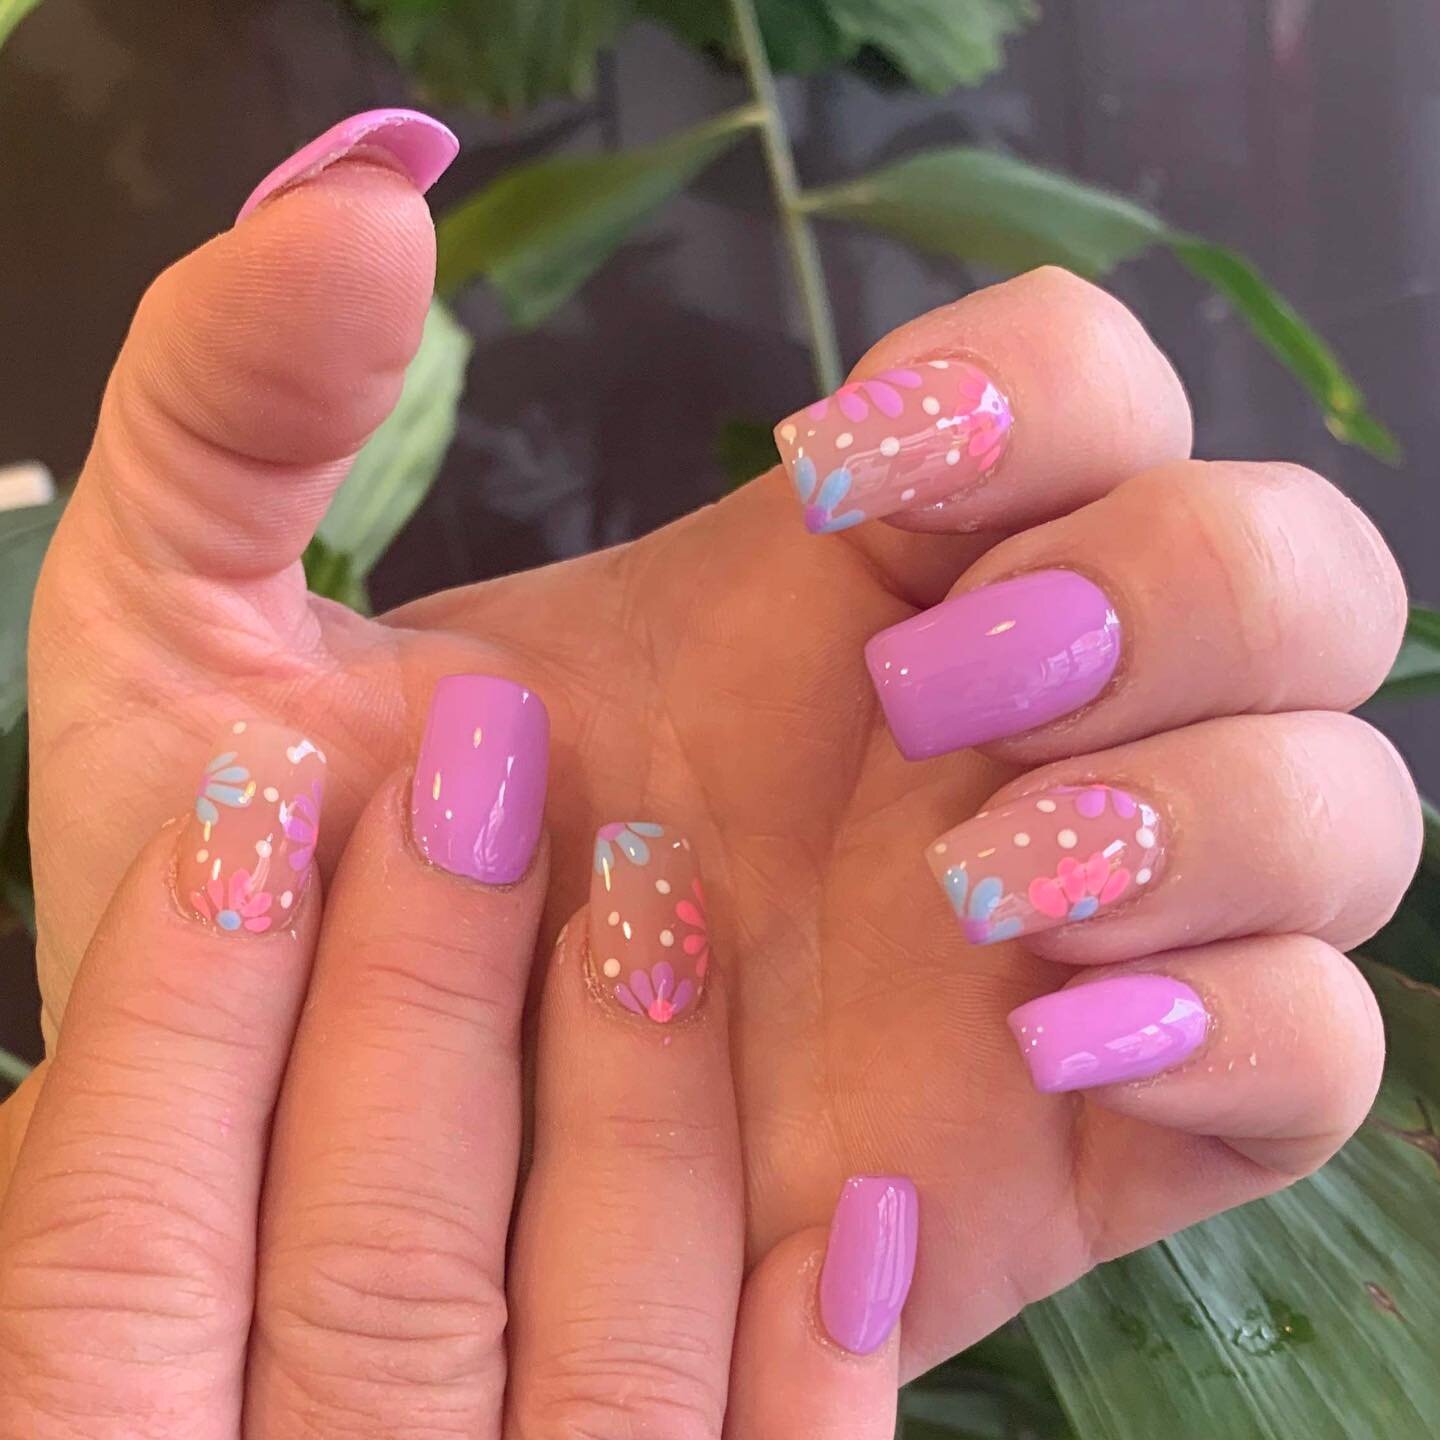 🌺 🌸

#nails #nailart #manicure #gelnails #nailstagram #nailswhitetip #nailcolourtip  #nailstyle #nailsart #naildesign #inspire #acrylicnails #gel #nailsnailsnails #nailtech #pedicure #gelpolish #floraldesign #floralnailart #floralnails